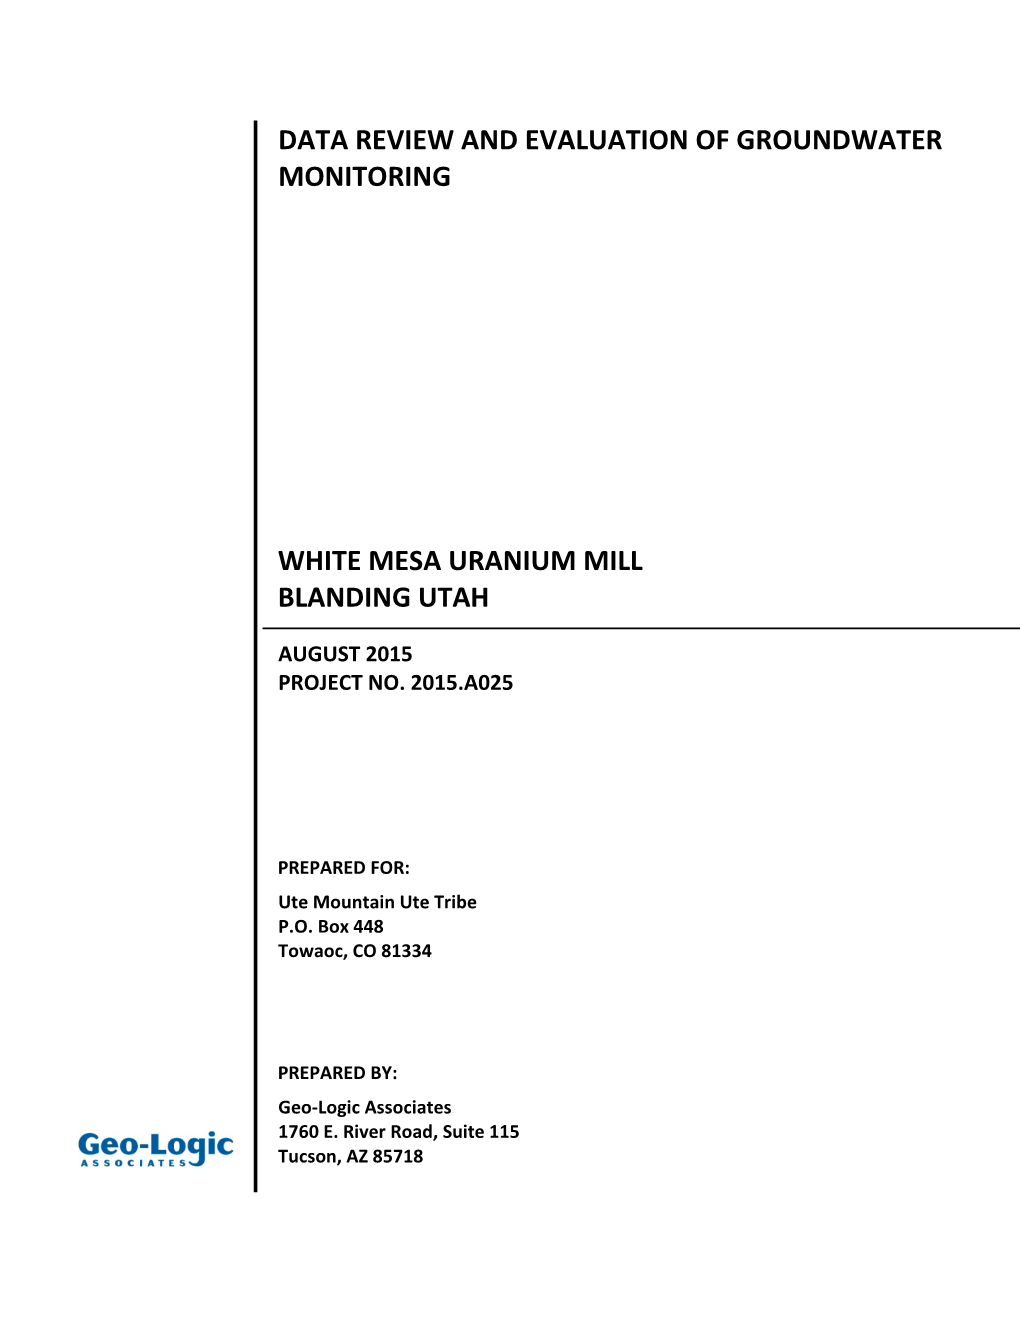 Data Review and Evaluation of Groundwater Monitoring White Mesa Uranium Mill Blanding Utah